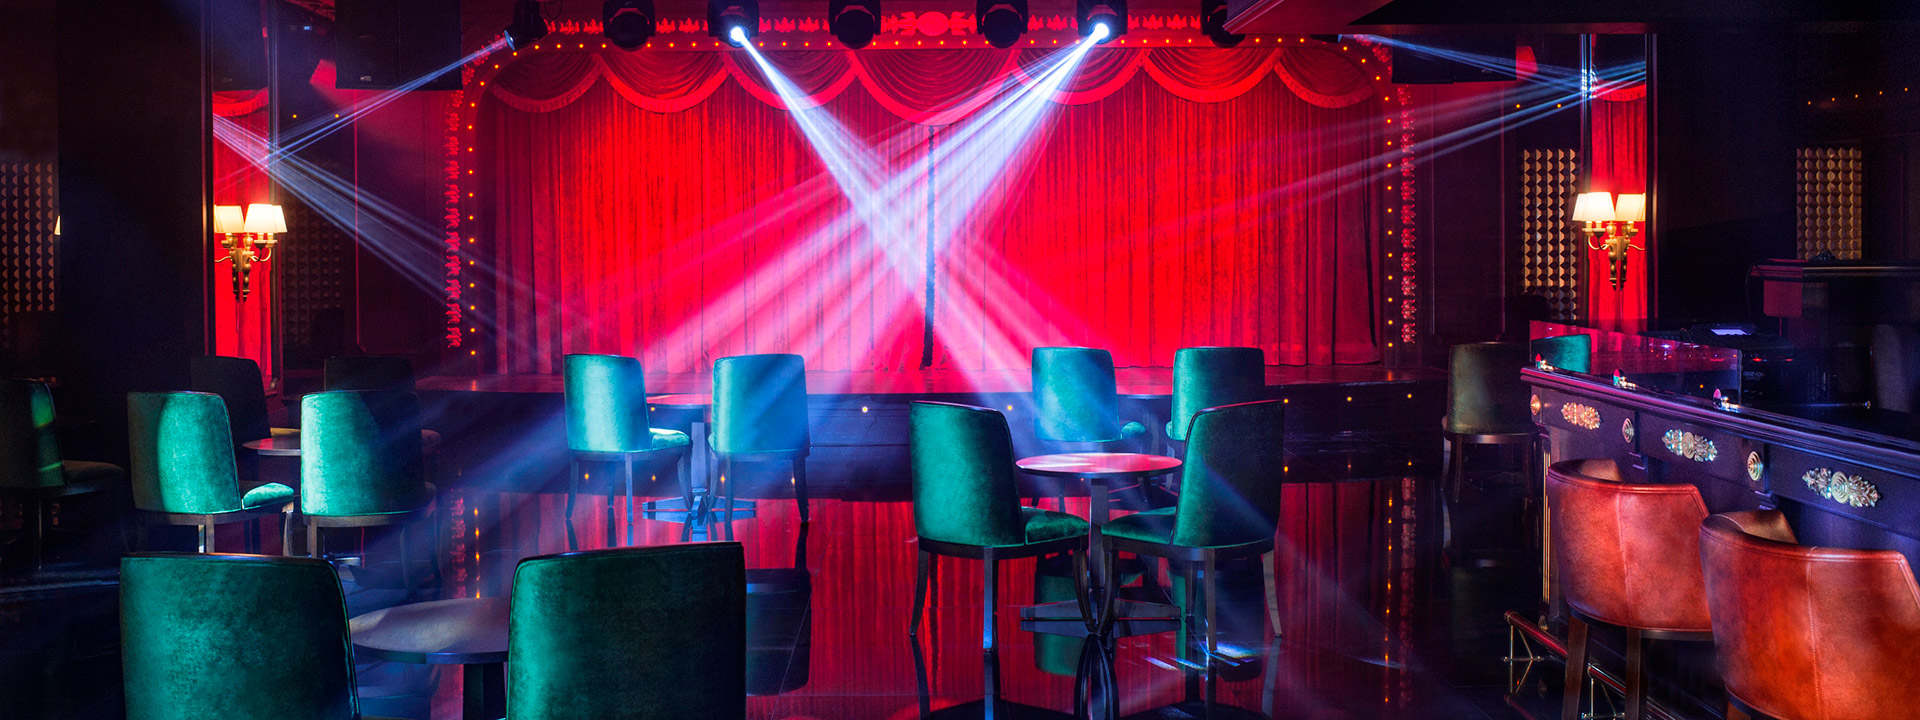 Night Clubs | Regnum Carya Hotel | Antalya Hotels